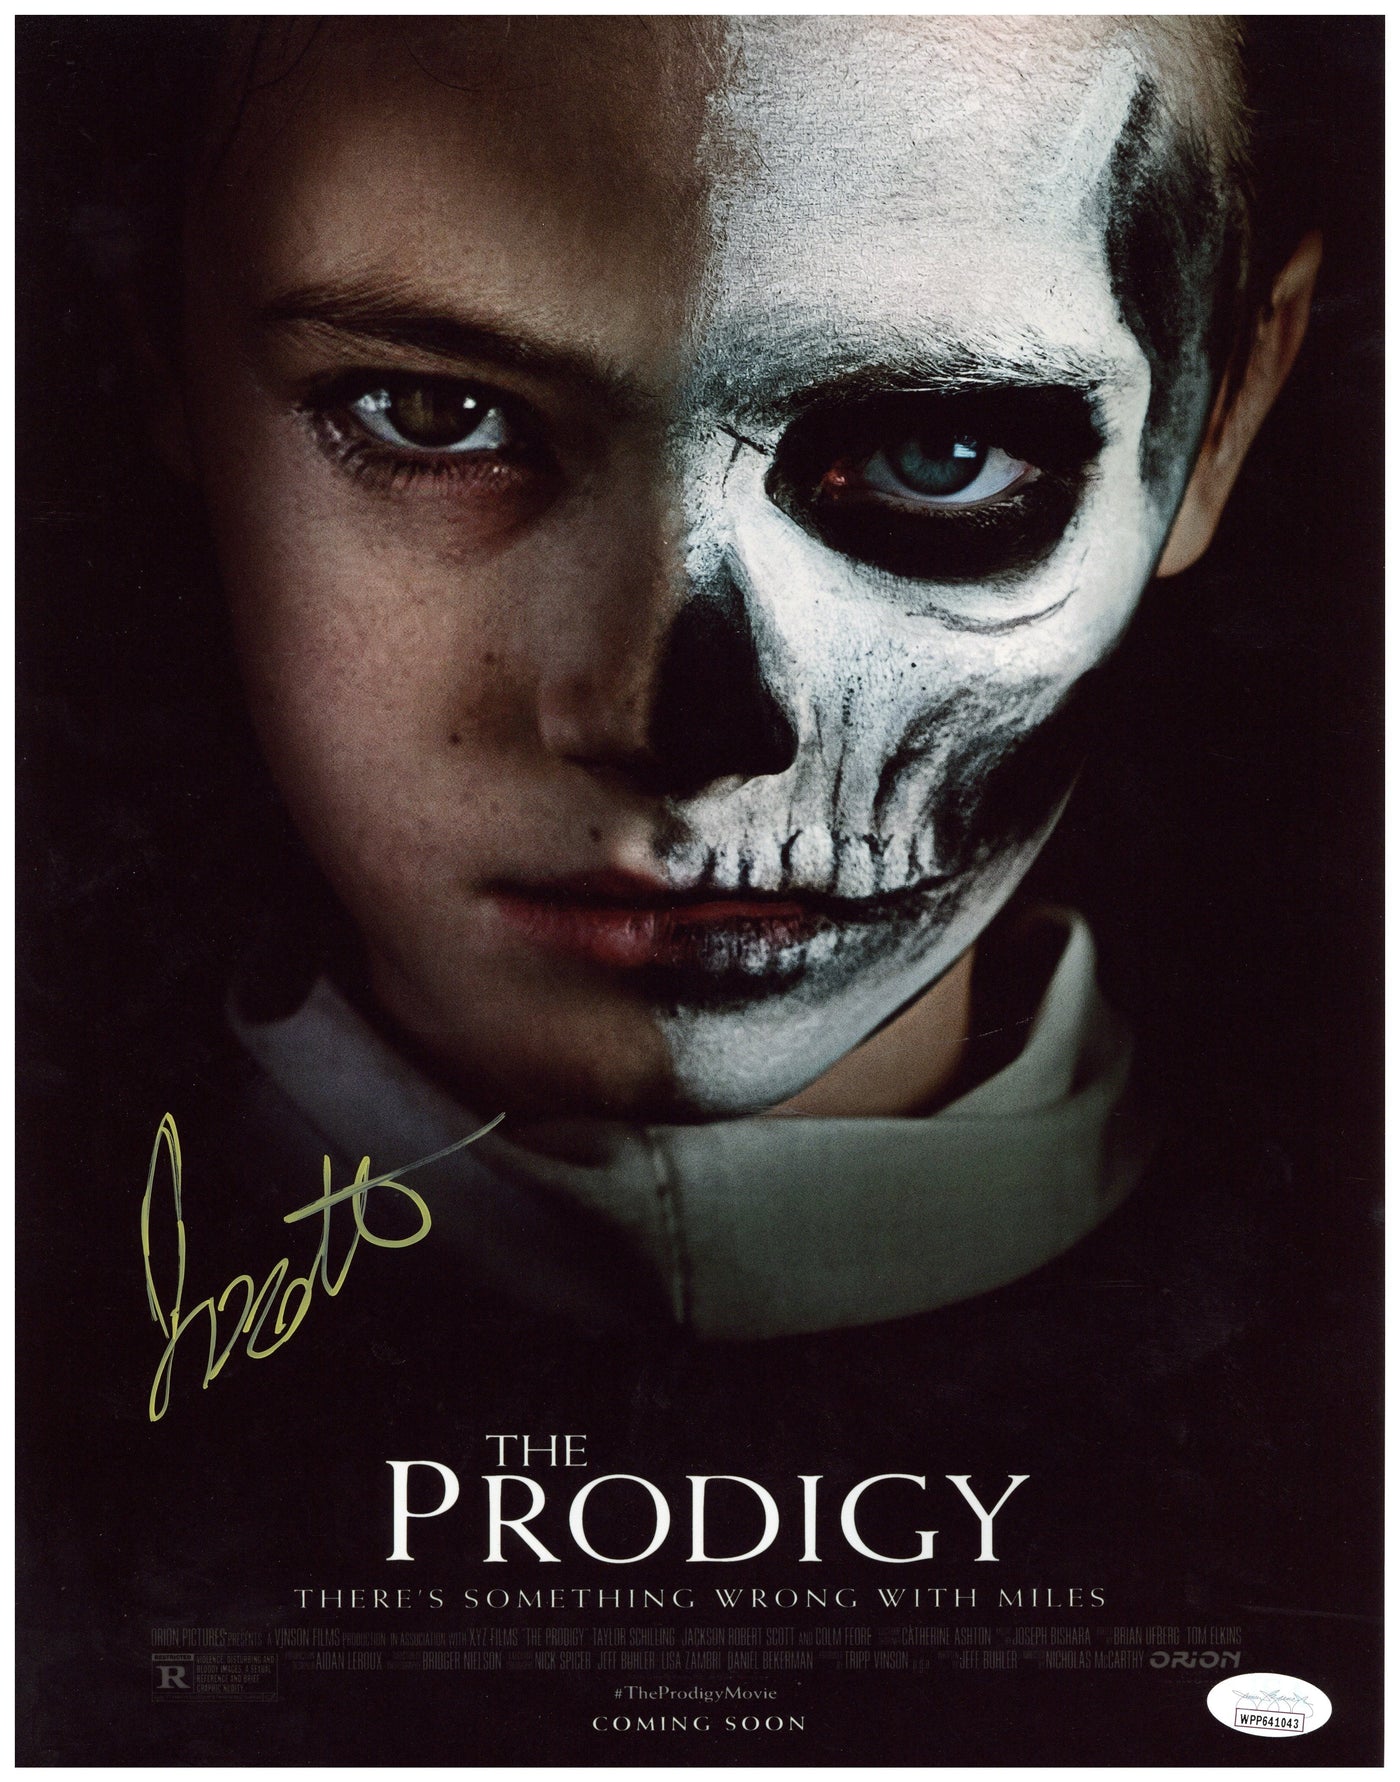 Jackson Robert Scott Signed 11x14 Photo The Prodigy Authentic Autographed JSA COA